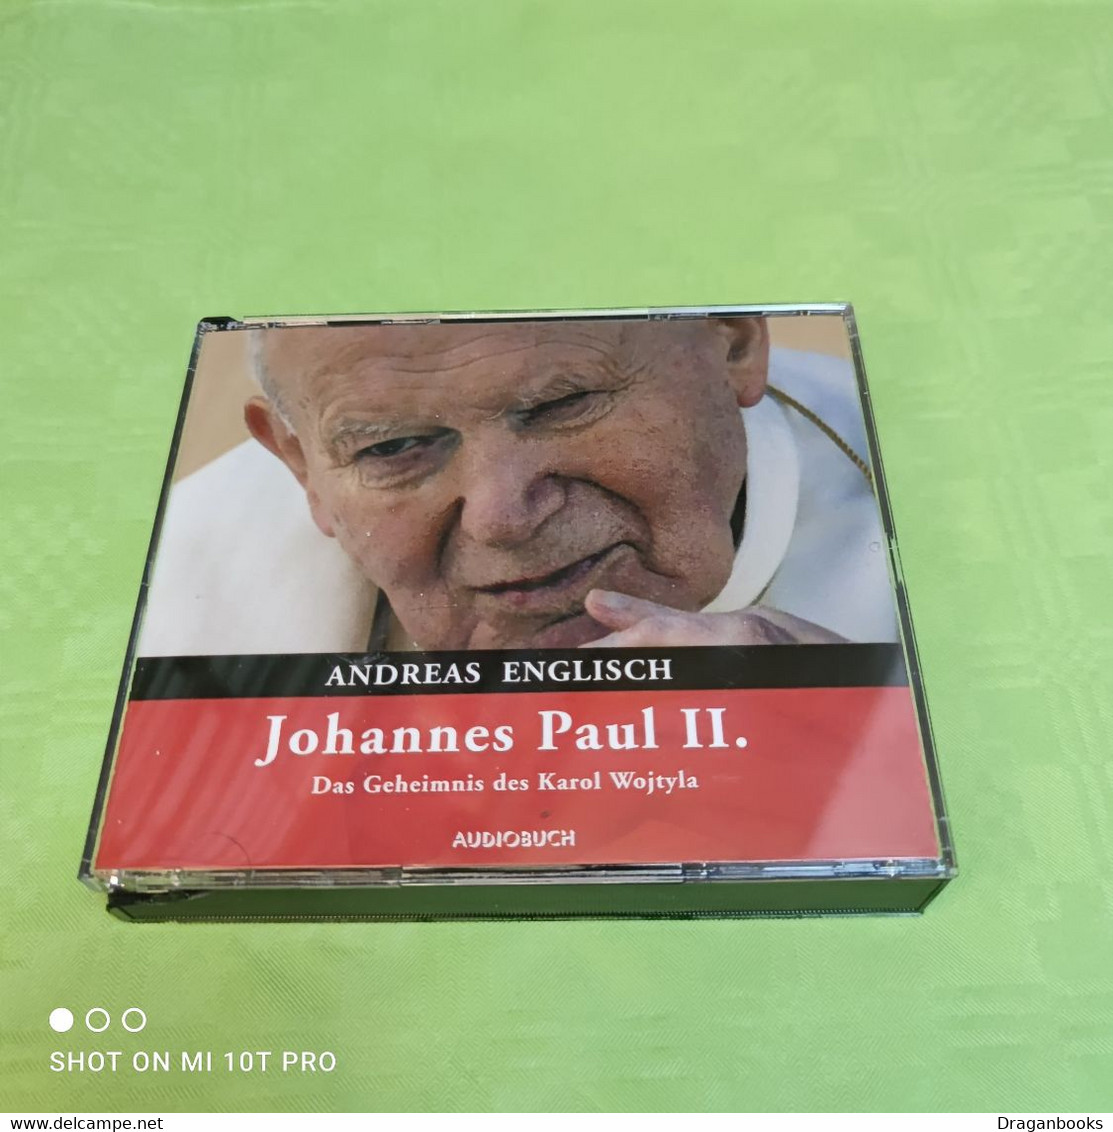 Andreas Englisch - Johannes Paul II. - CD